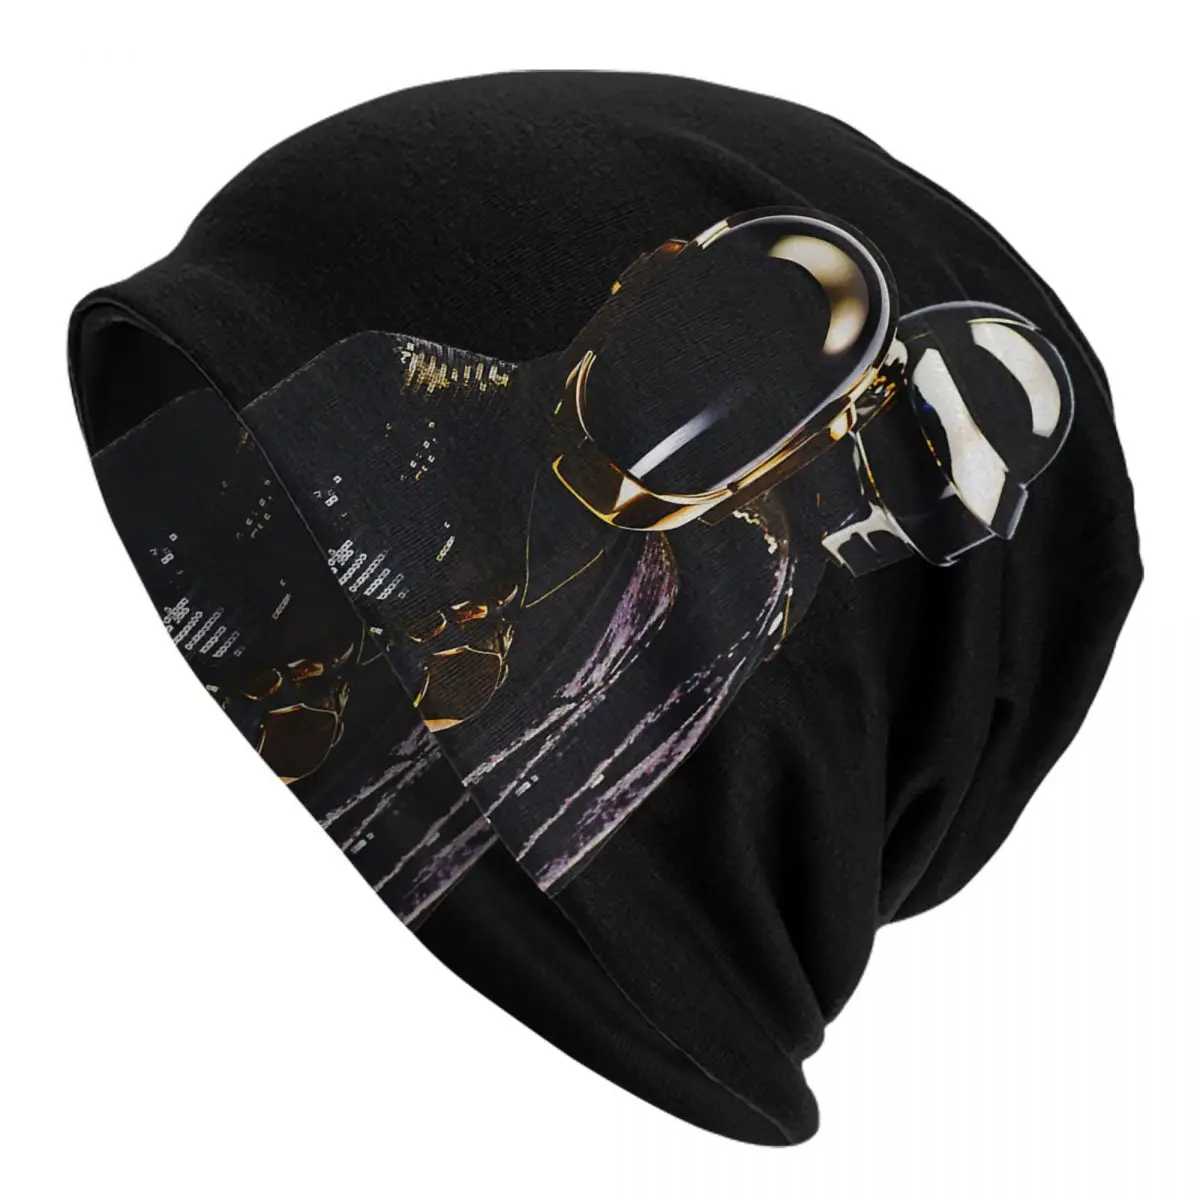 Daft Punk Adult Men's Women's Knit Hat Keep warm winter Funny knitted hat